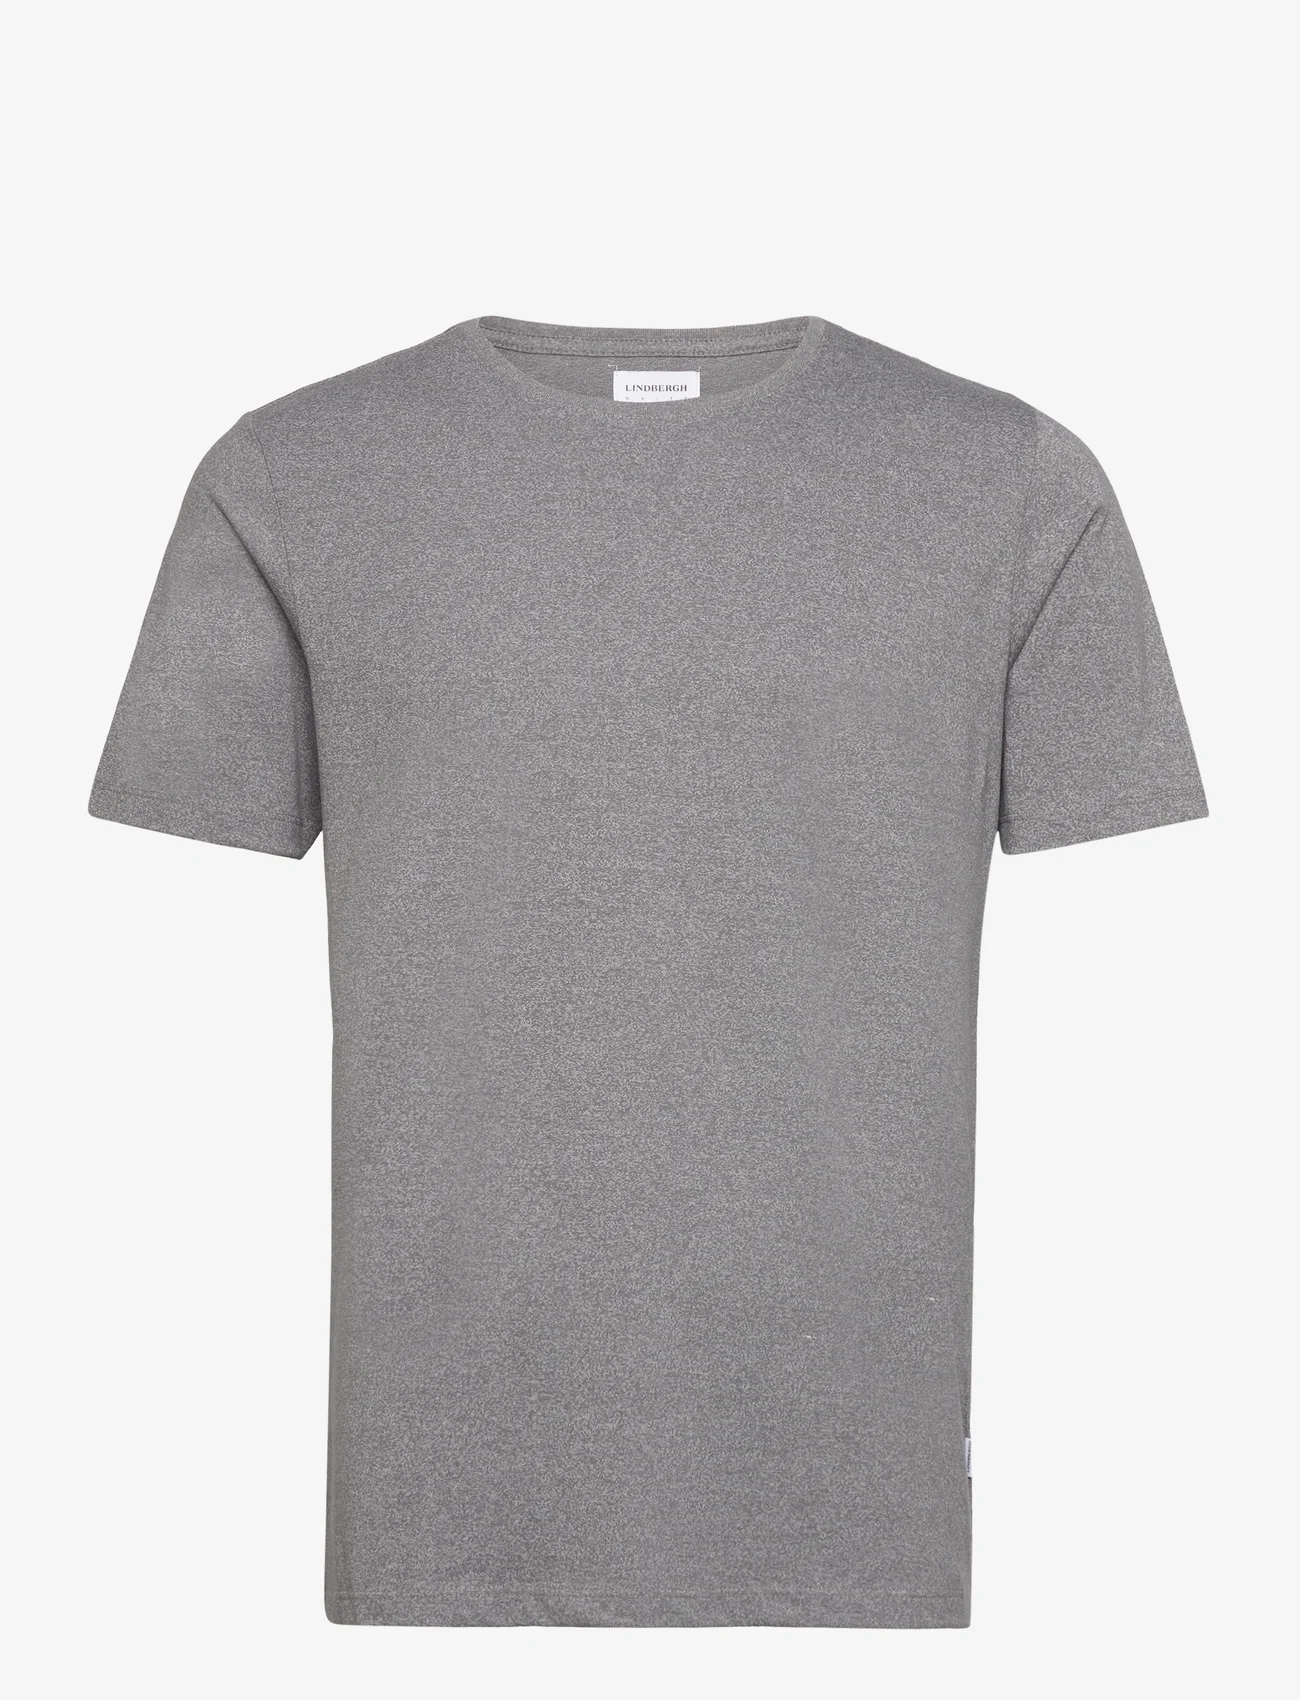 Lindbergh - Mouliné o-neck tee S/S - basic t-shirts - grey mix 123 - 0